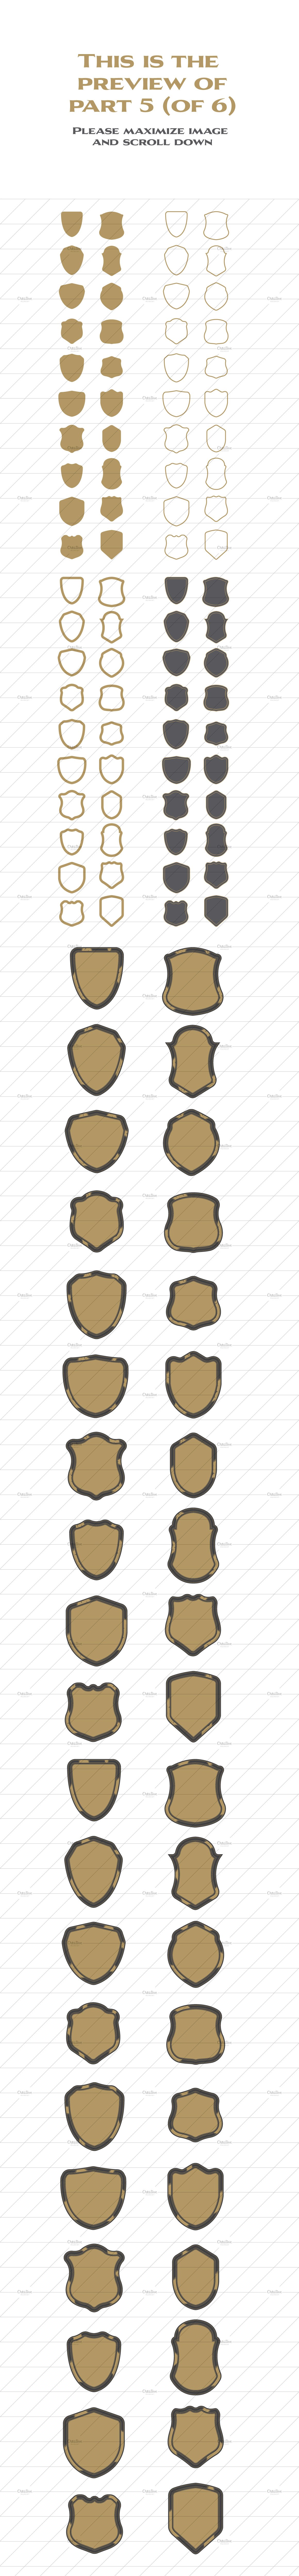 1080 shields shapes vector set base shapes preview part 5 336